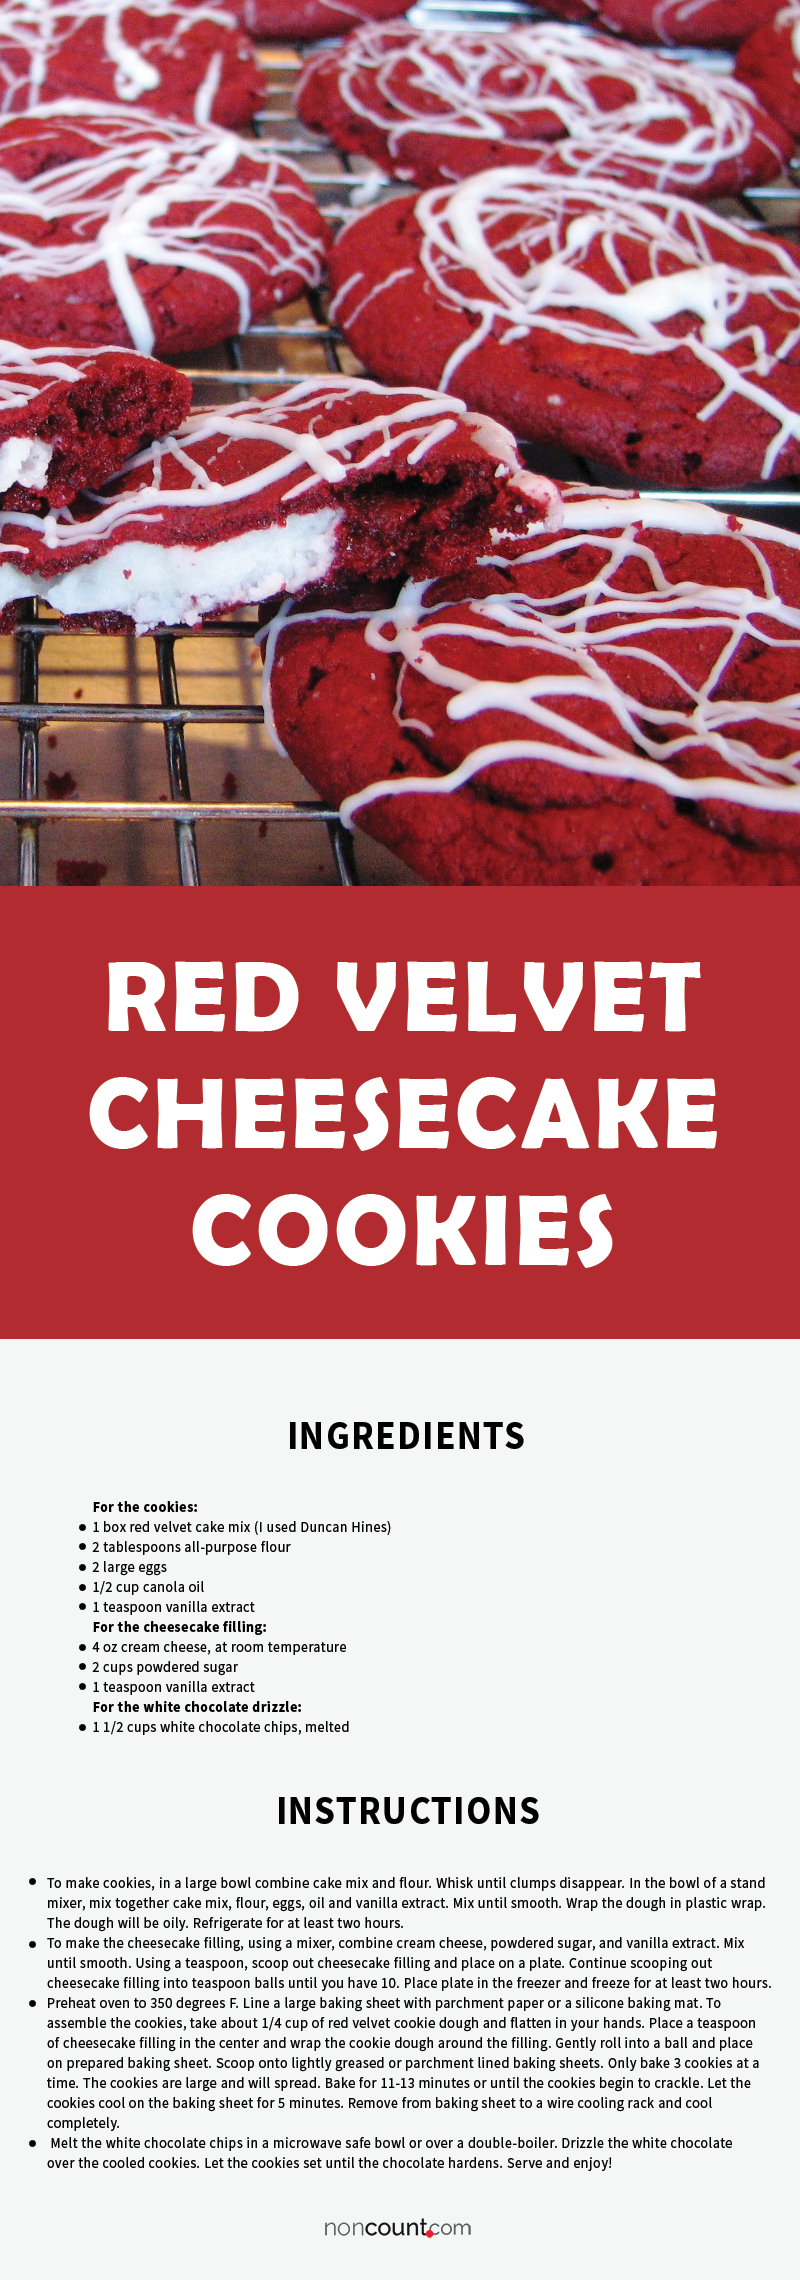 Red Velvet Cheesecake Cookies Recipe Image